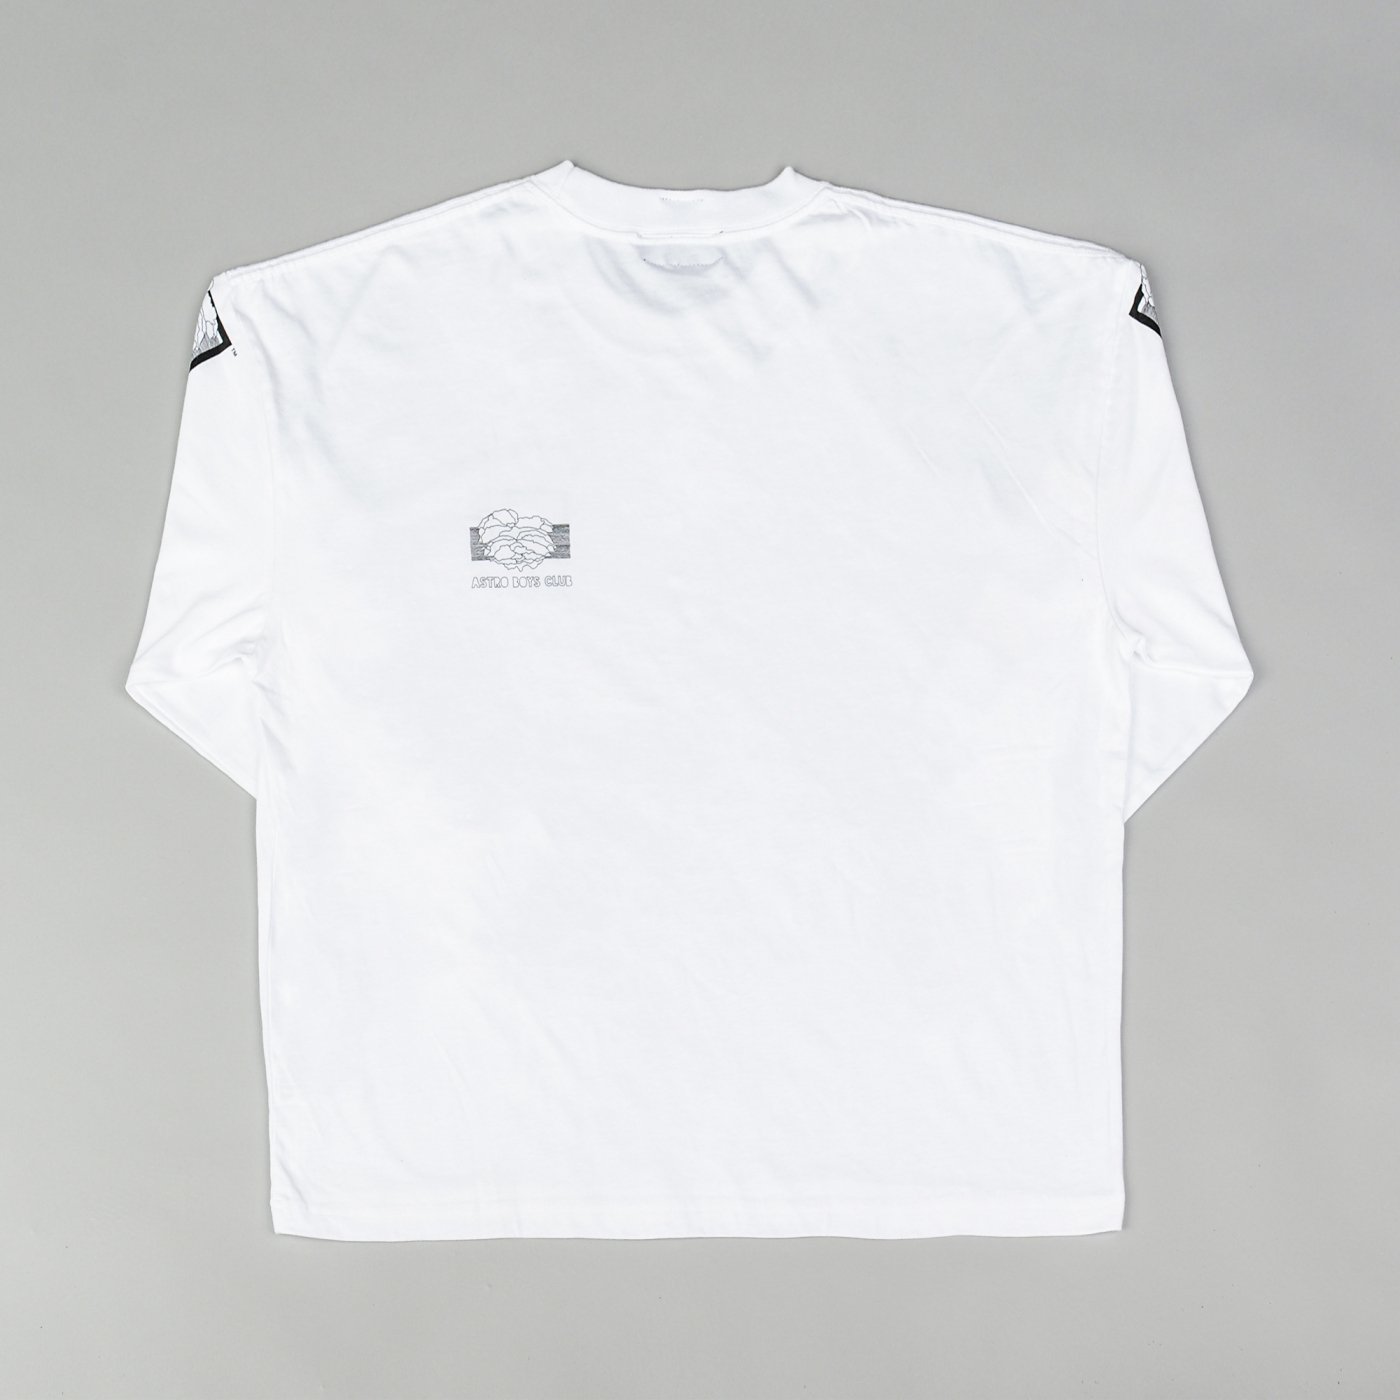 ASTRO BOYS CLUB × BOTANIZE Long sleeve Tシャツ - BOTANIZE